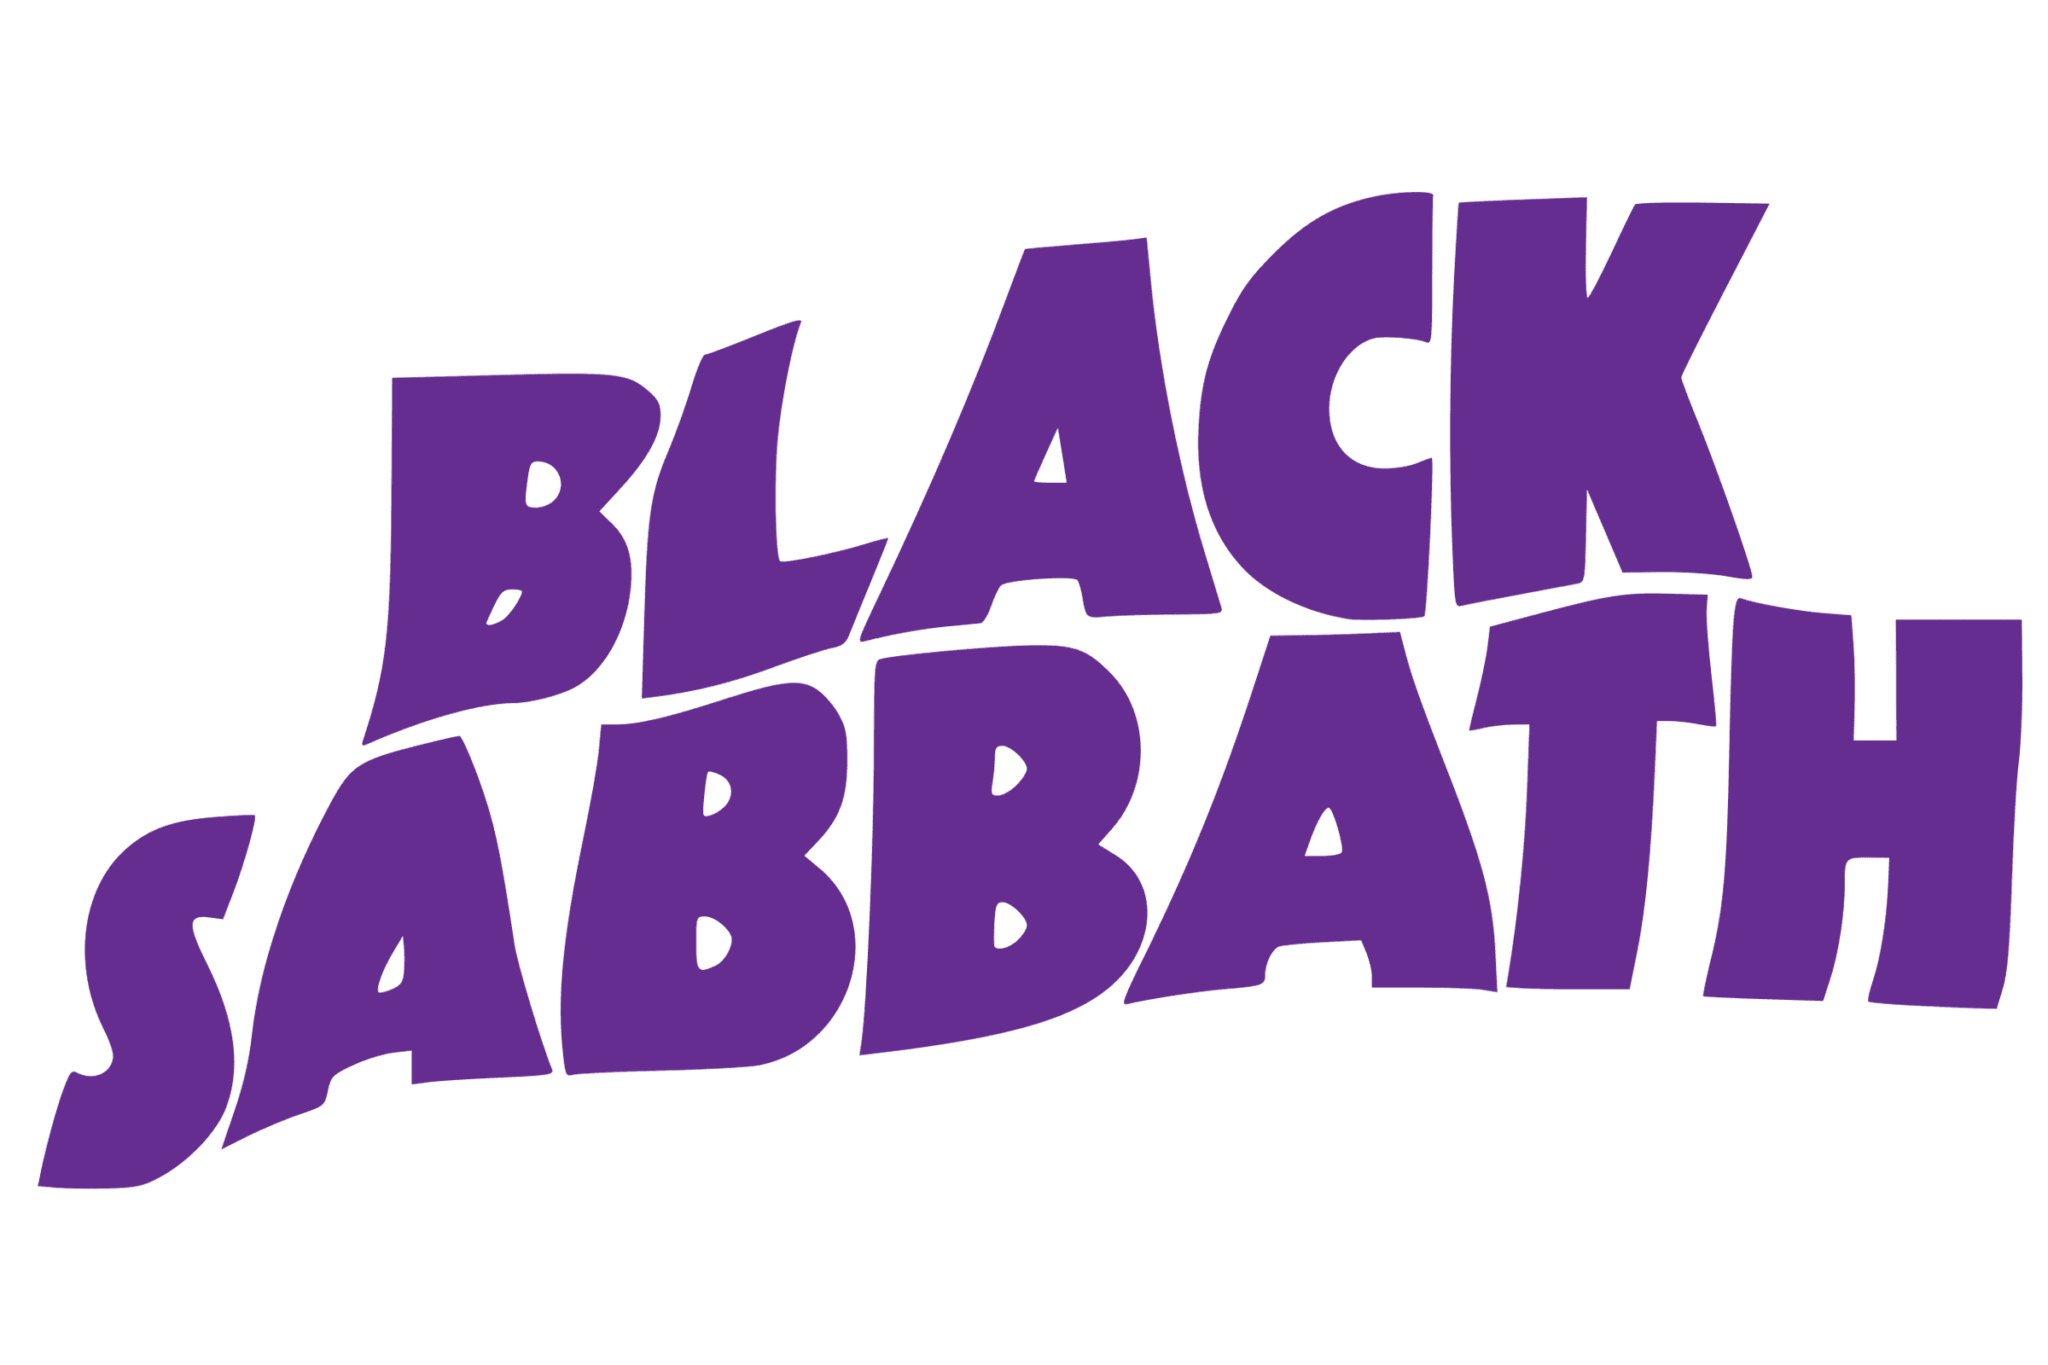 black sabbath logo